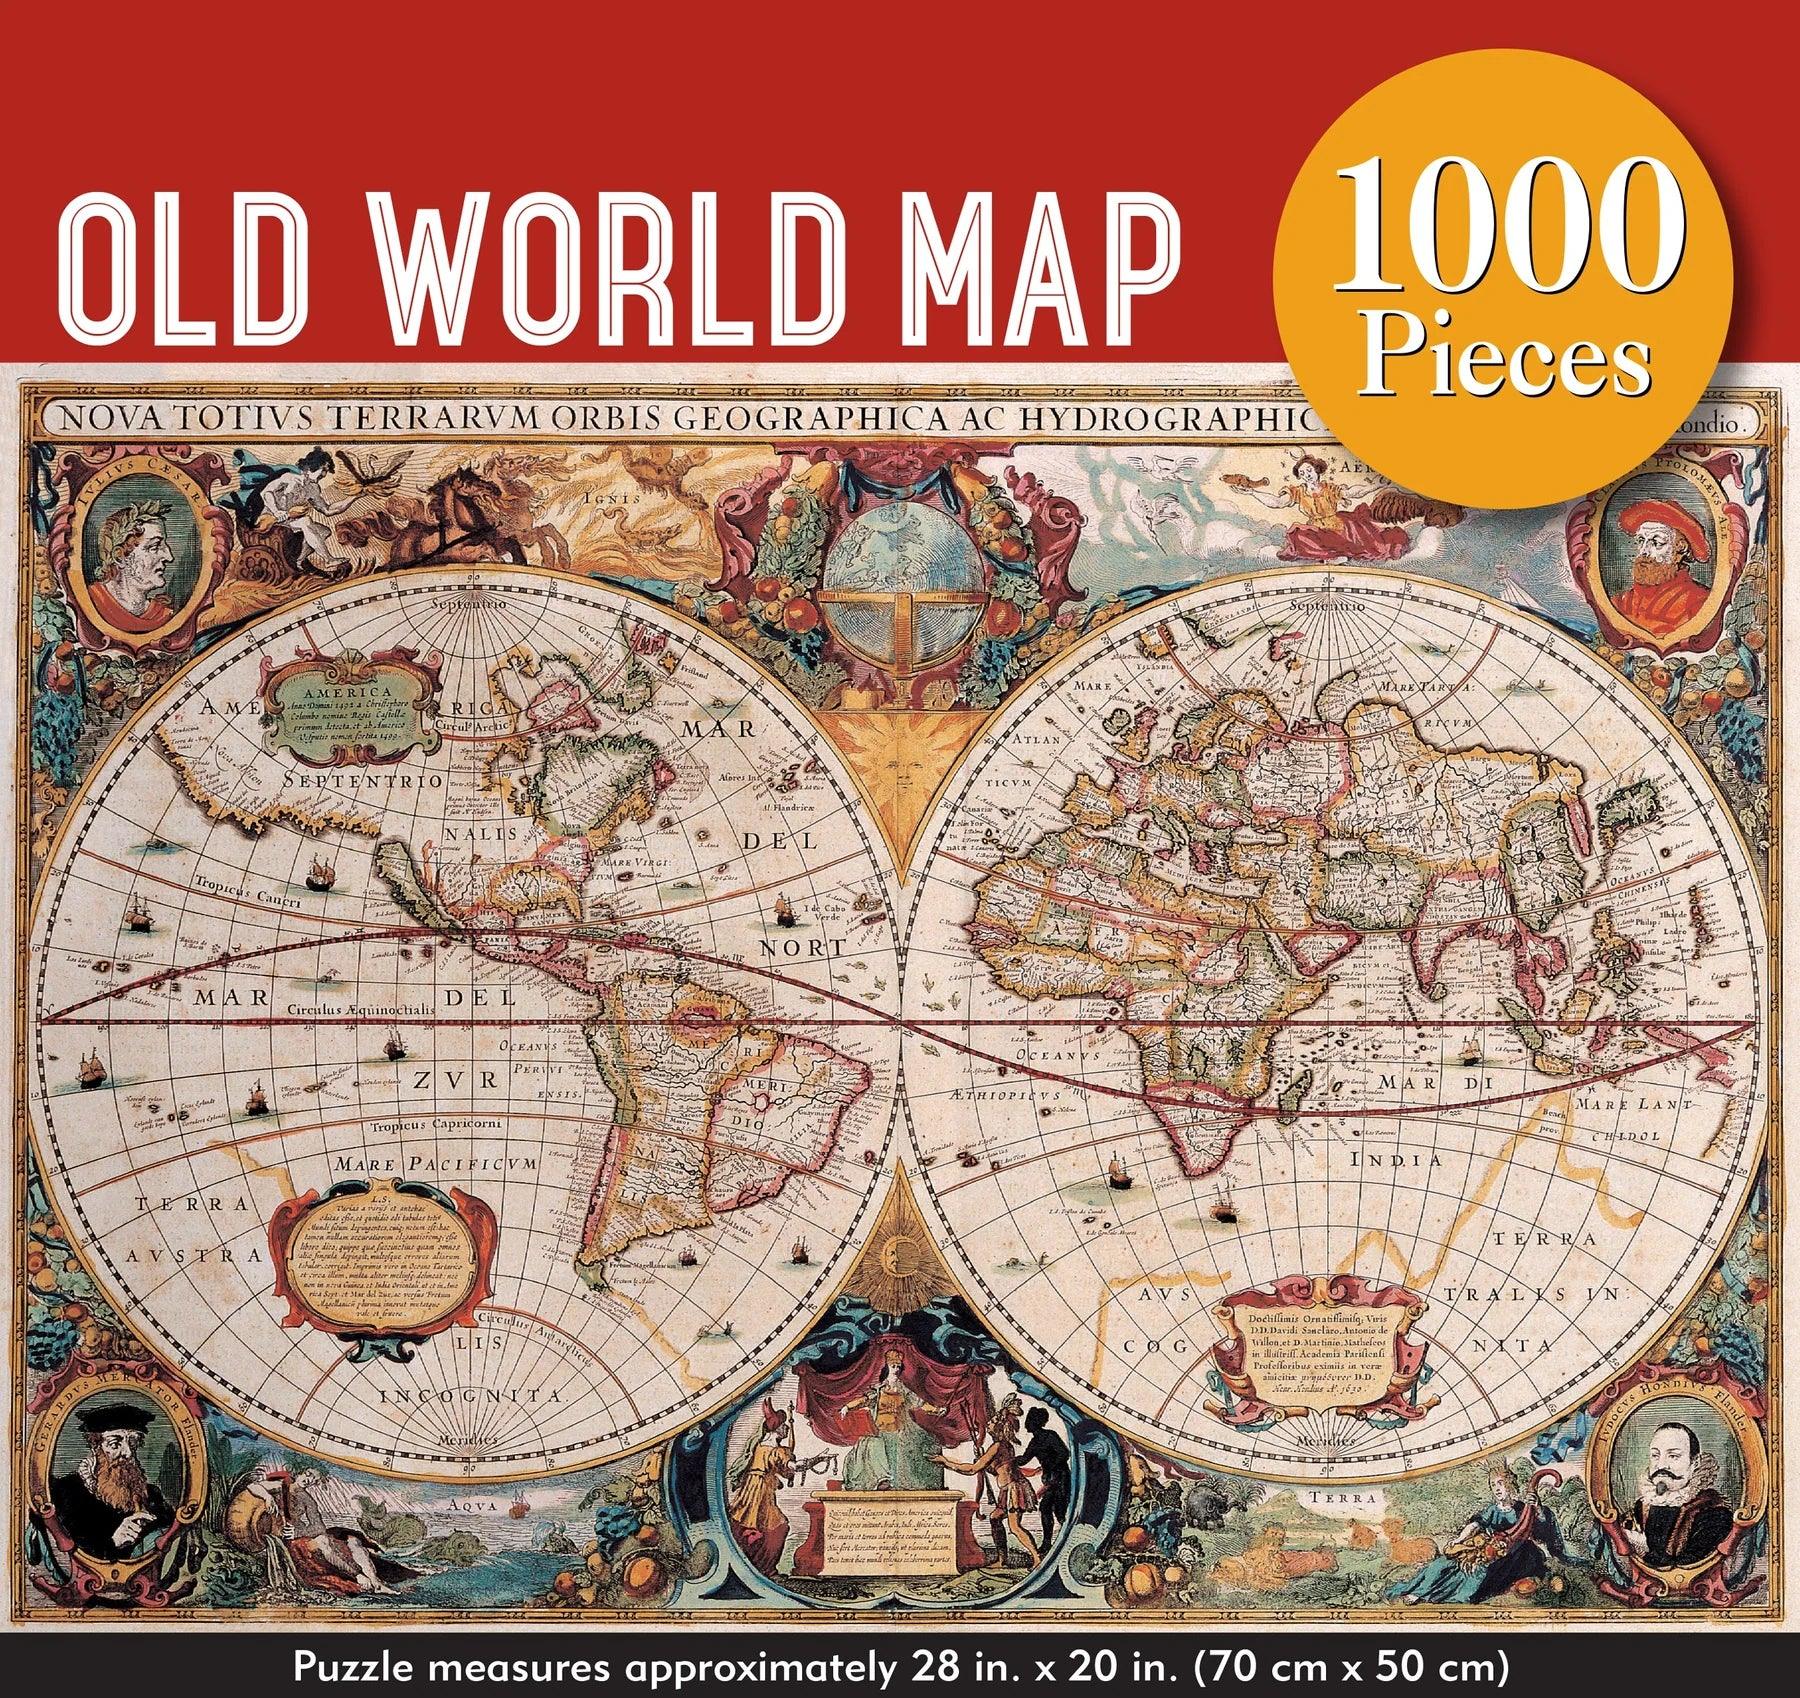 Peter Pauper Old World Map 1000 Piece Jigsaw Puzzle - Eclipse Games Puzzles Novelties